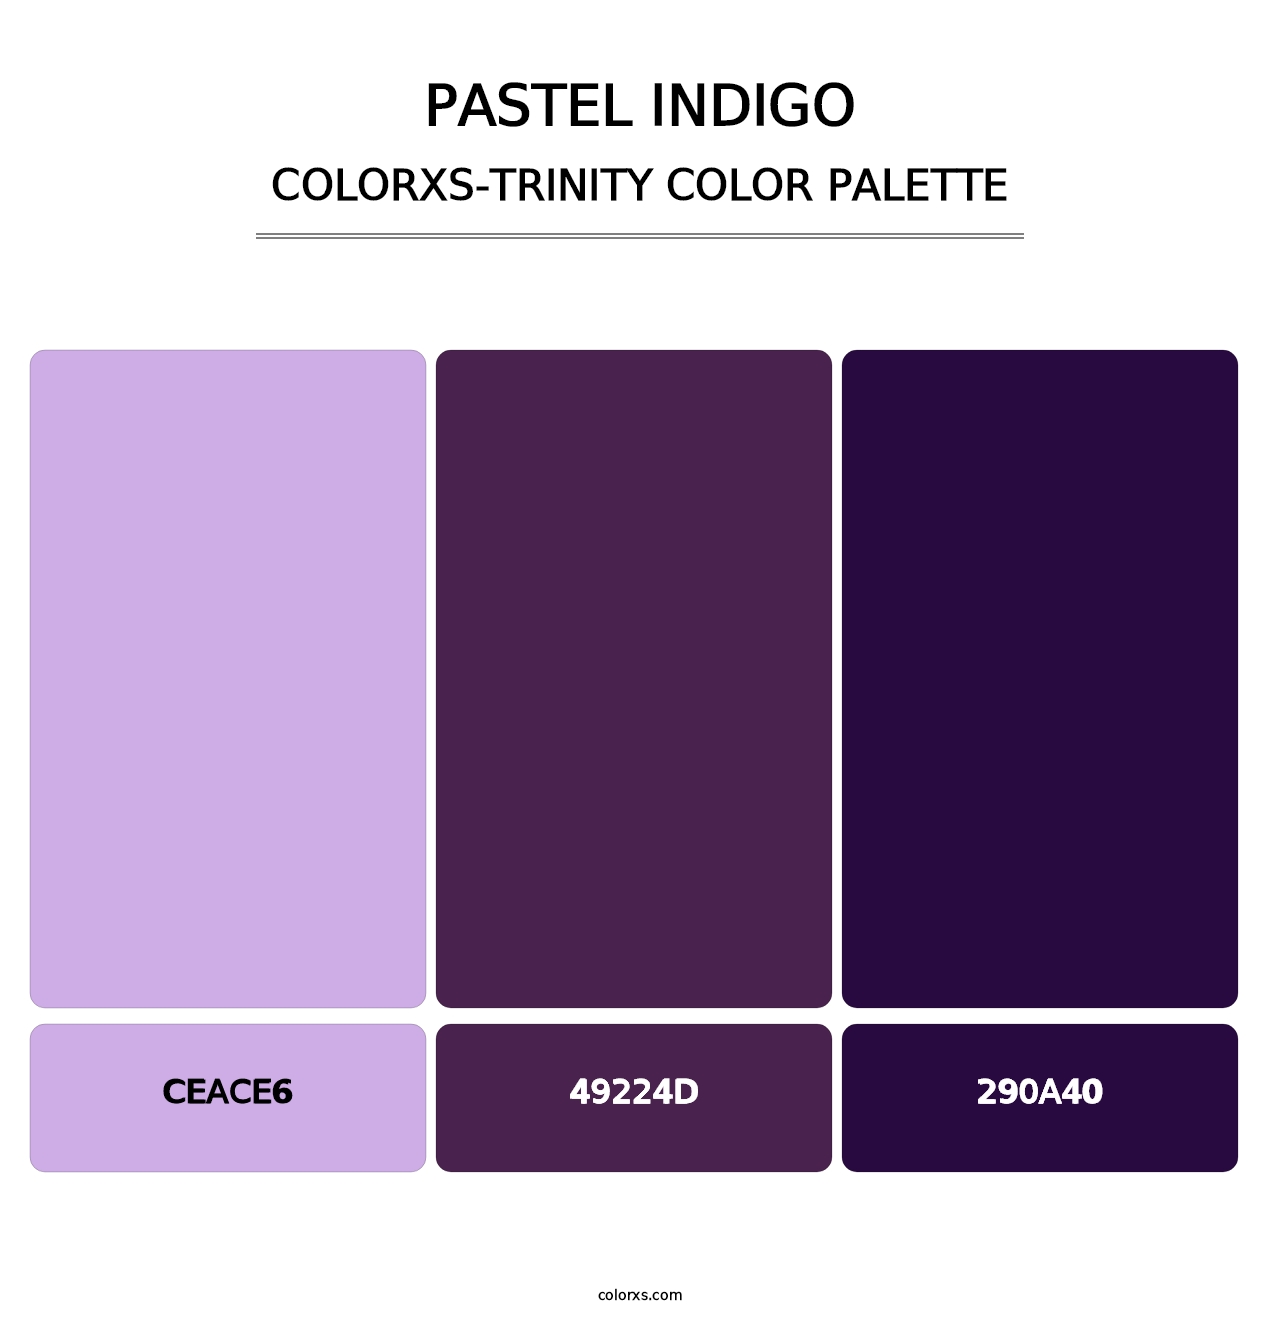 Pastel Indigo - Colorxs Trinity Palette